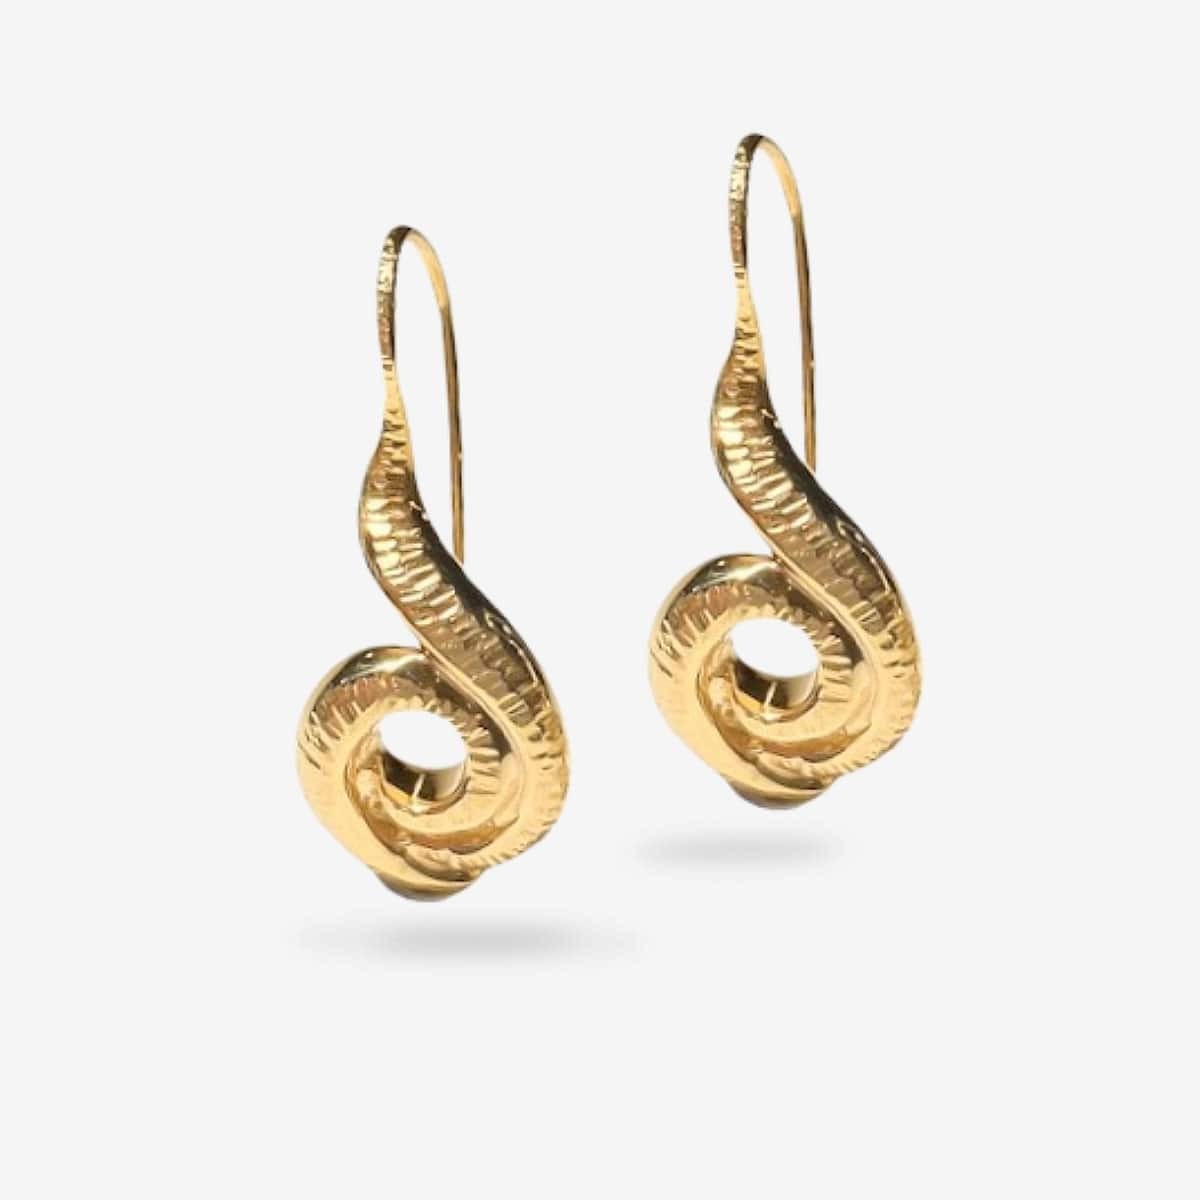 Surrea Goldplated Earrings - Ohrhänger - 22k vergoldet